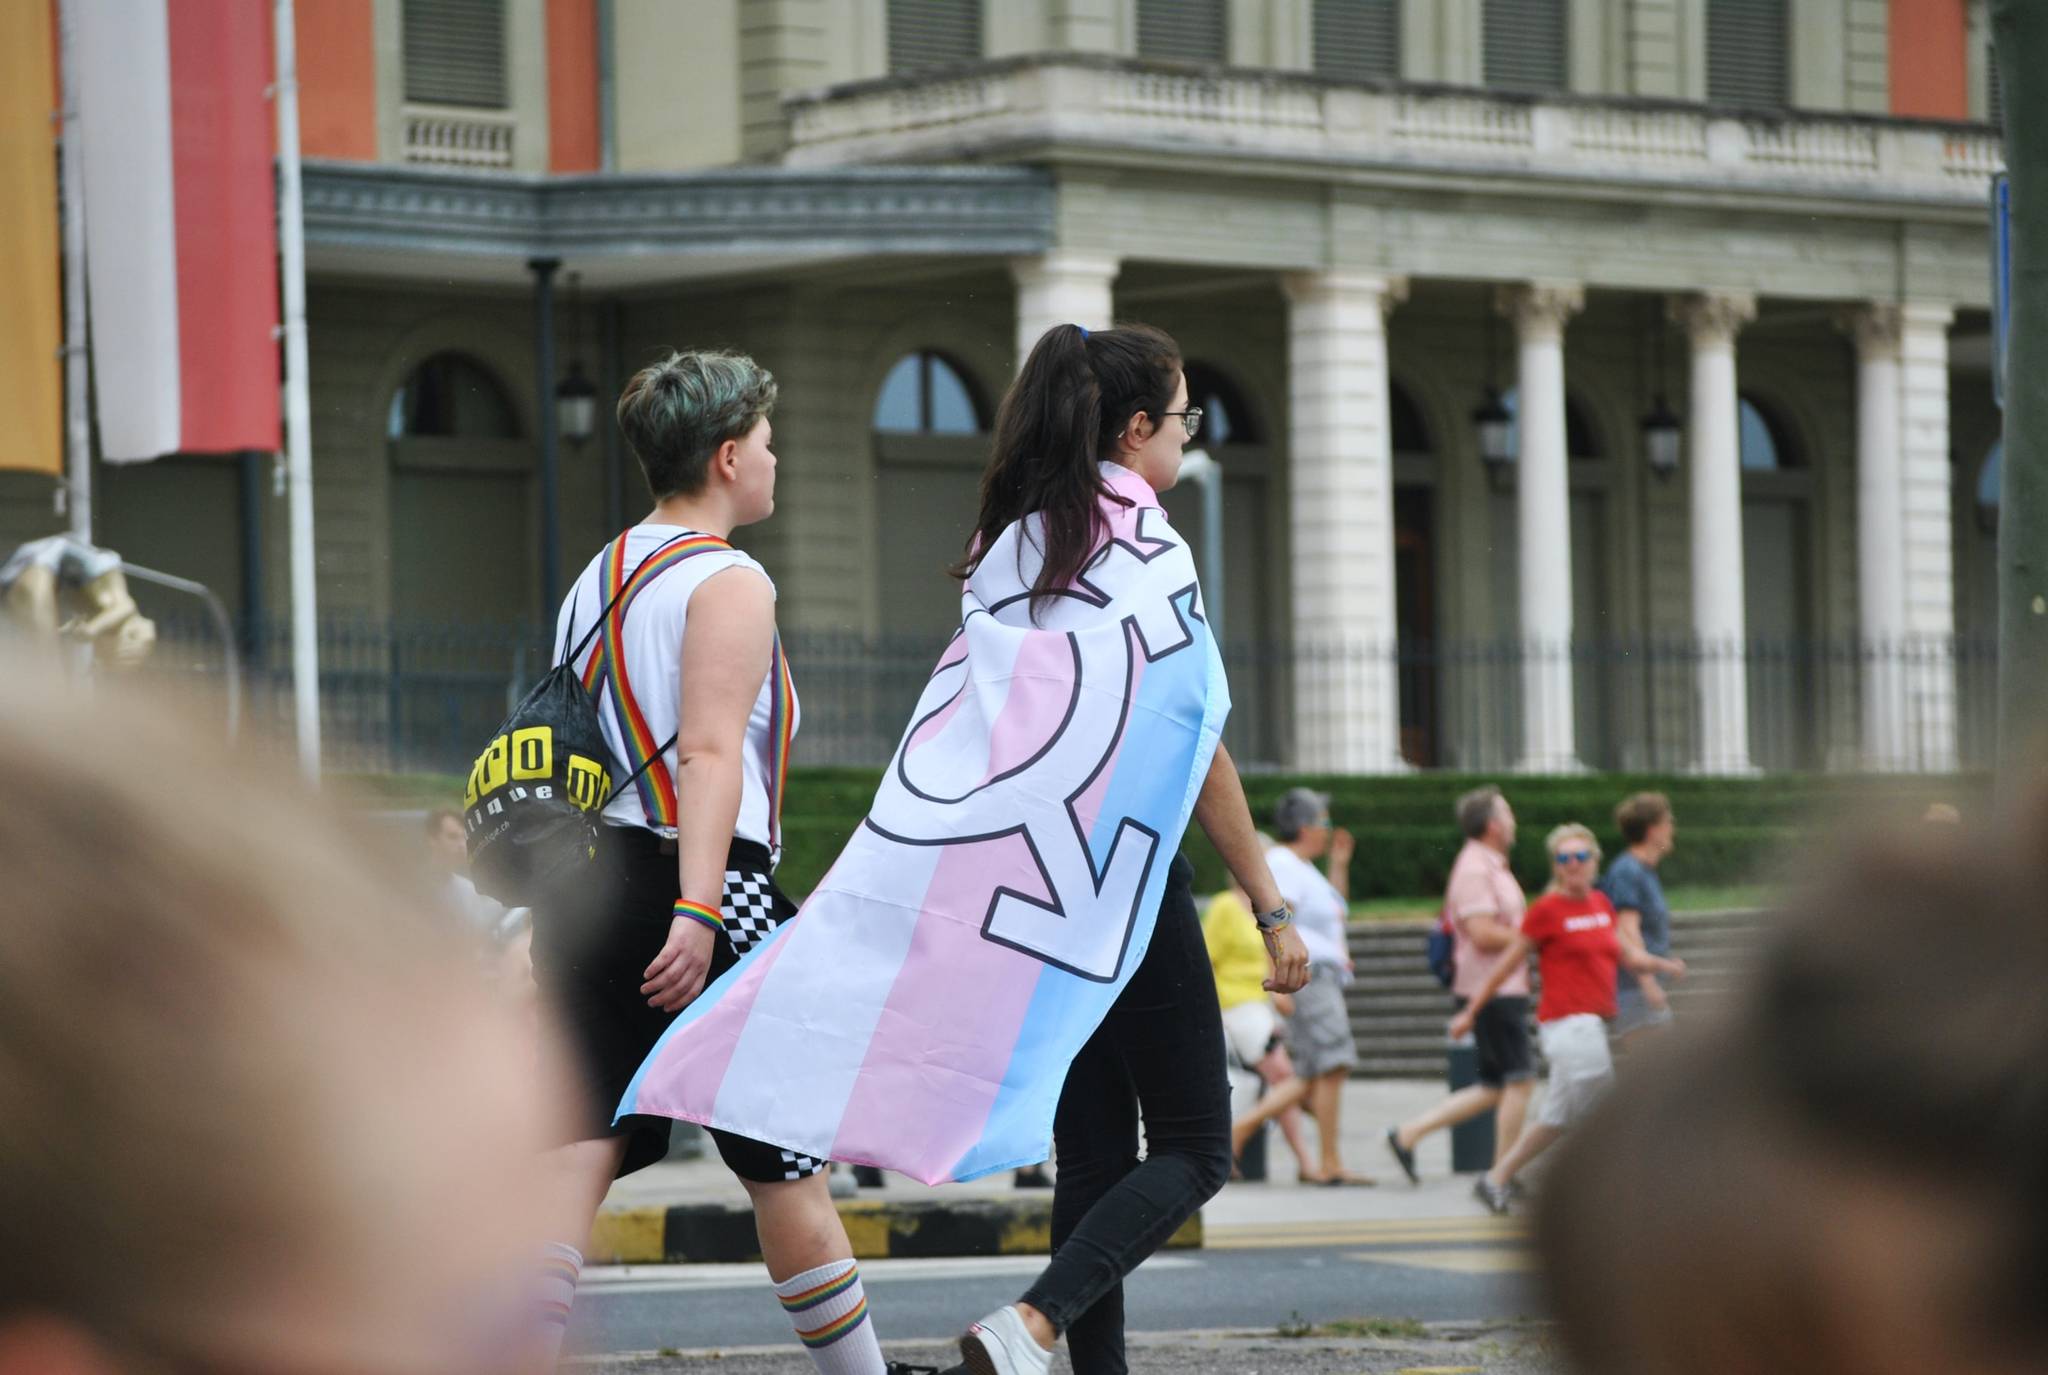 Prejudice towards trans people increases in the UK